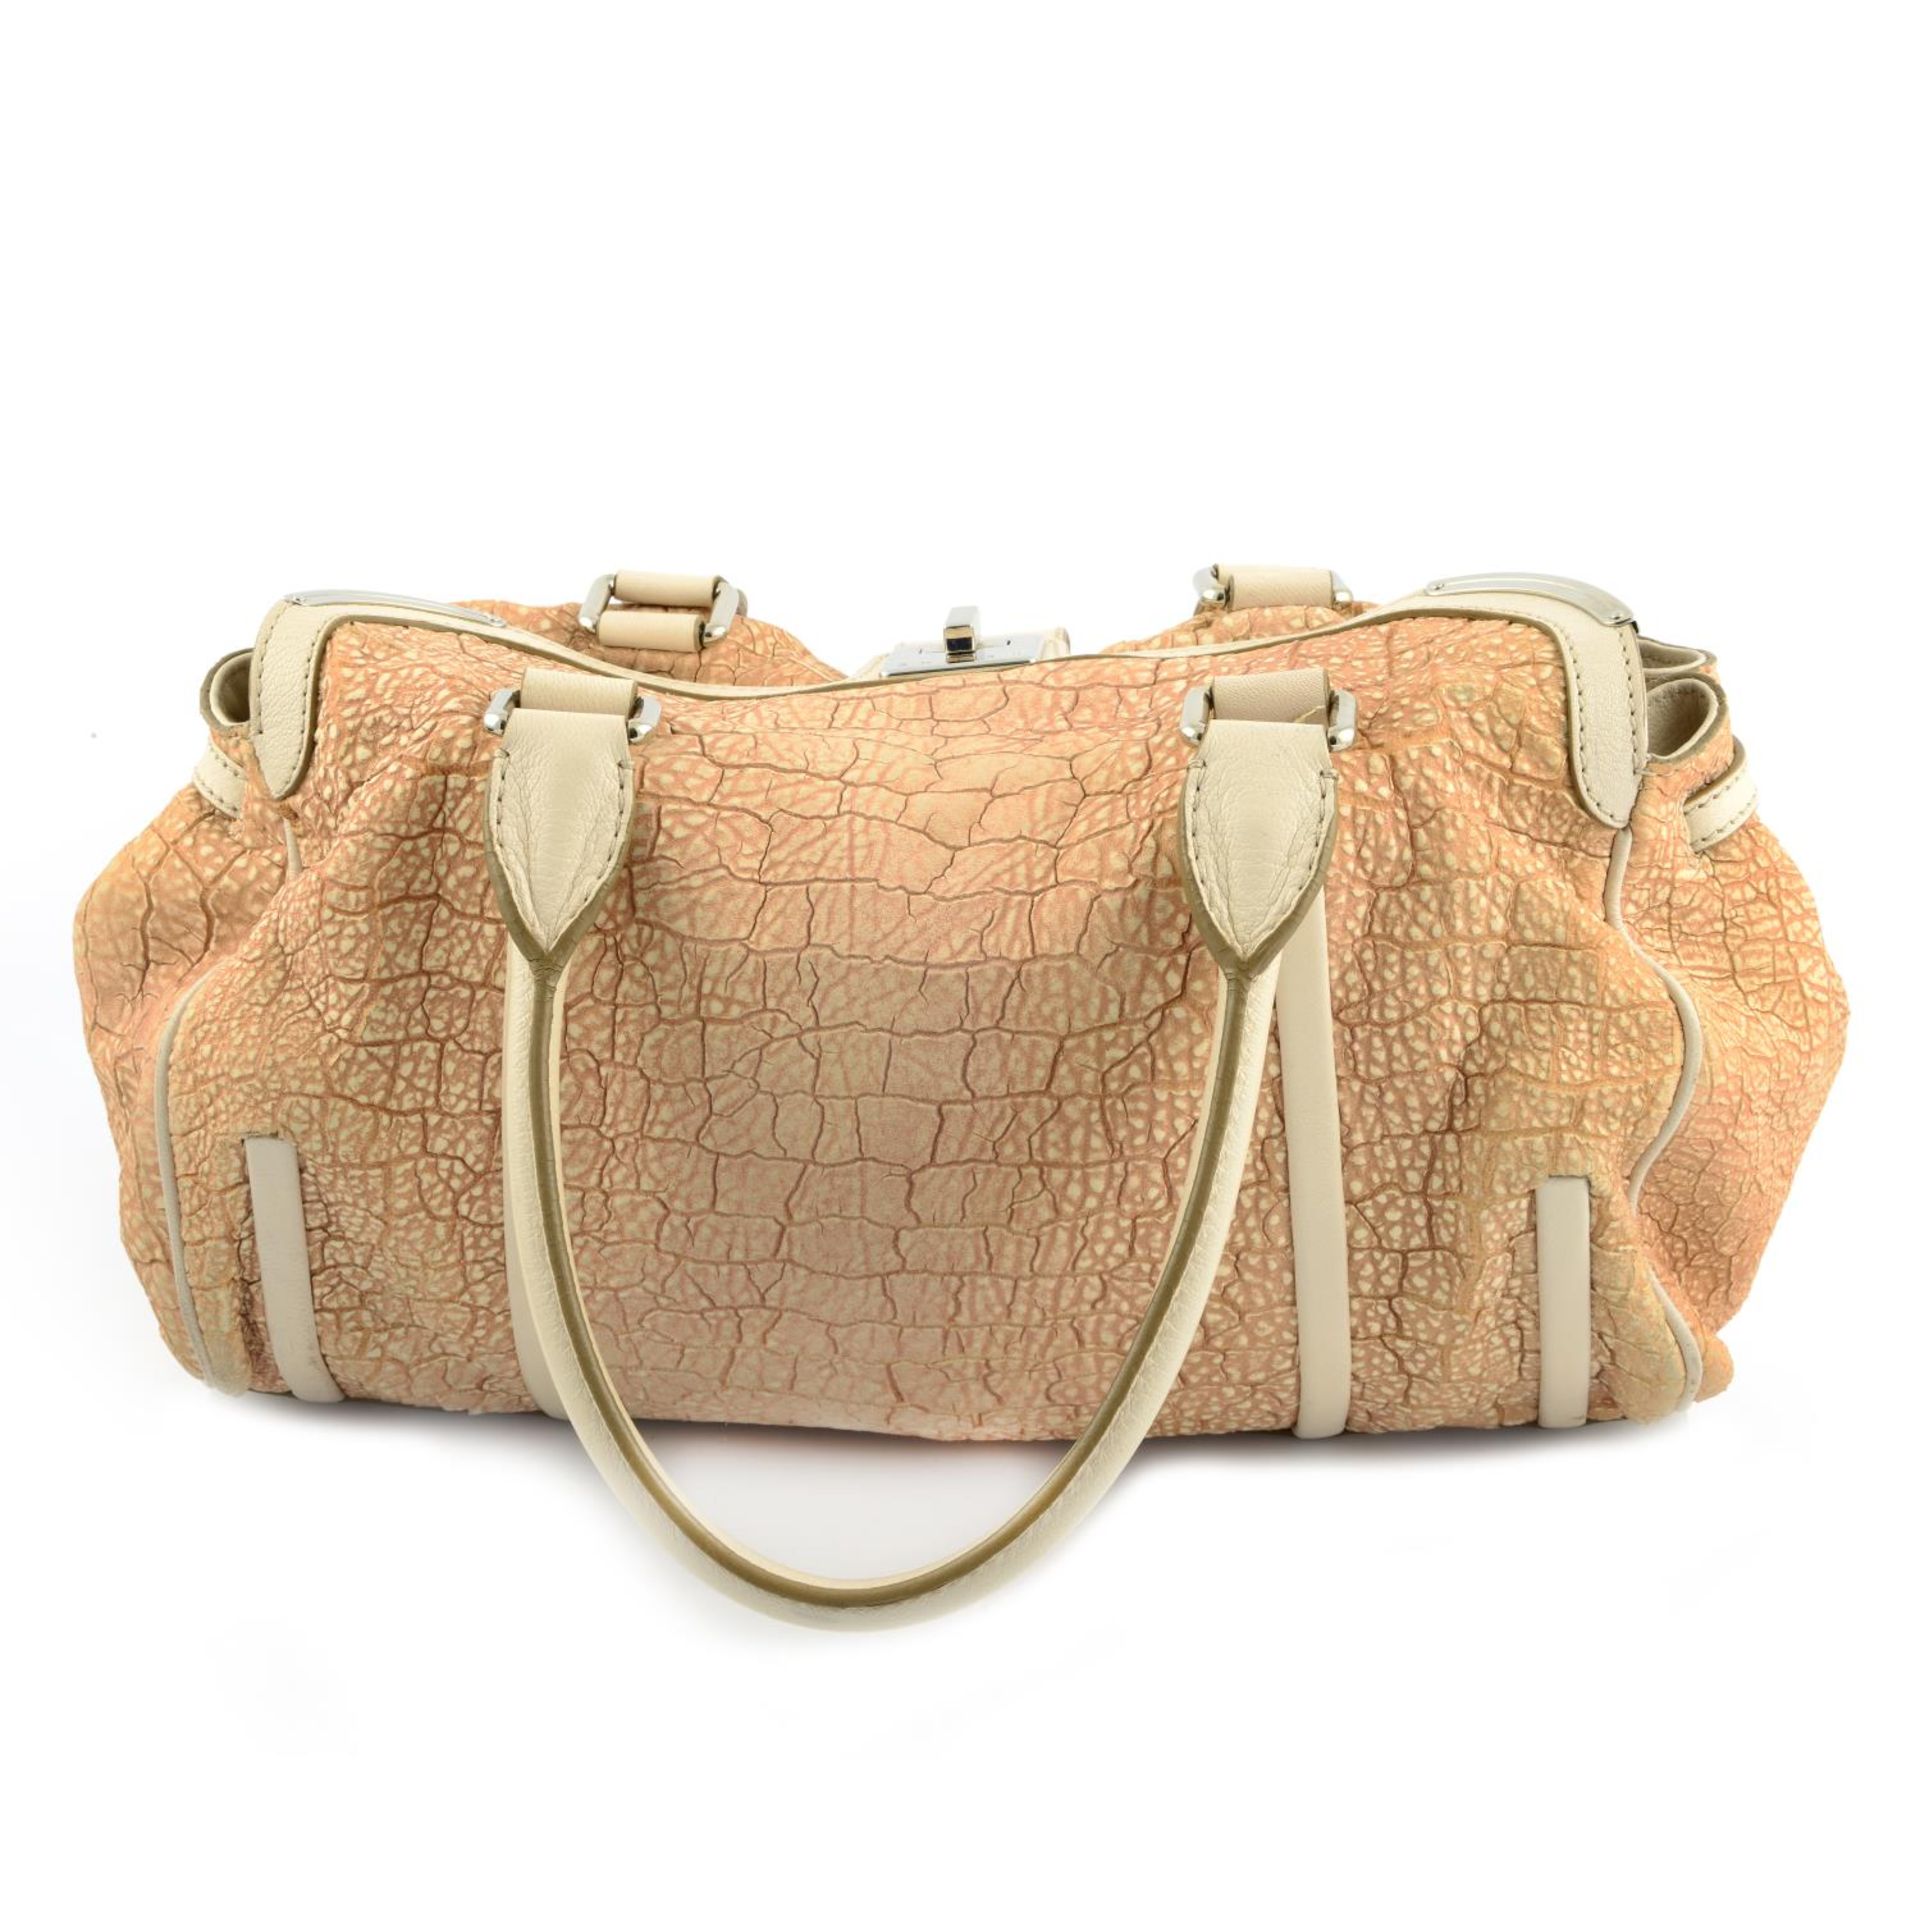 CÉLINE - a textured leather handbag. - Bild 2 aus 9